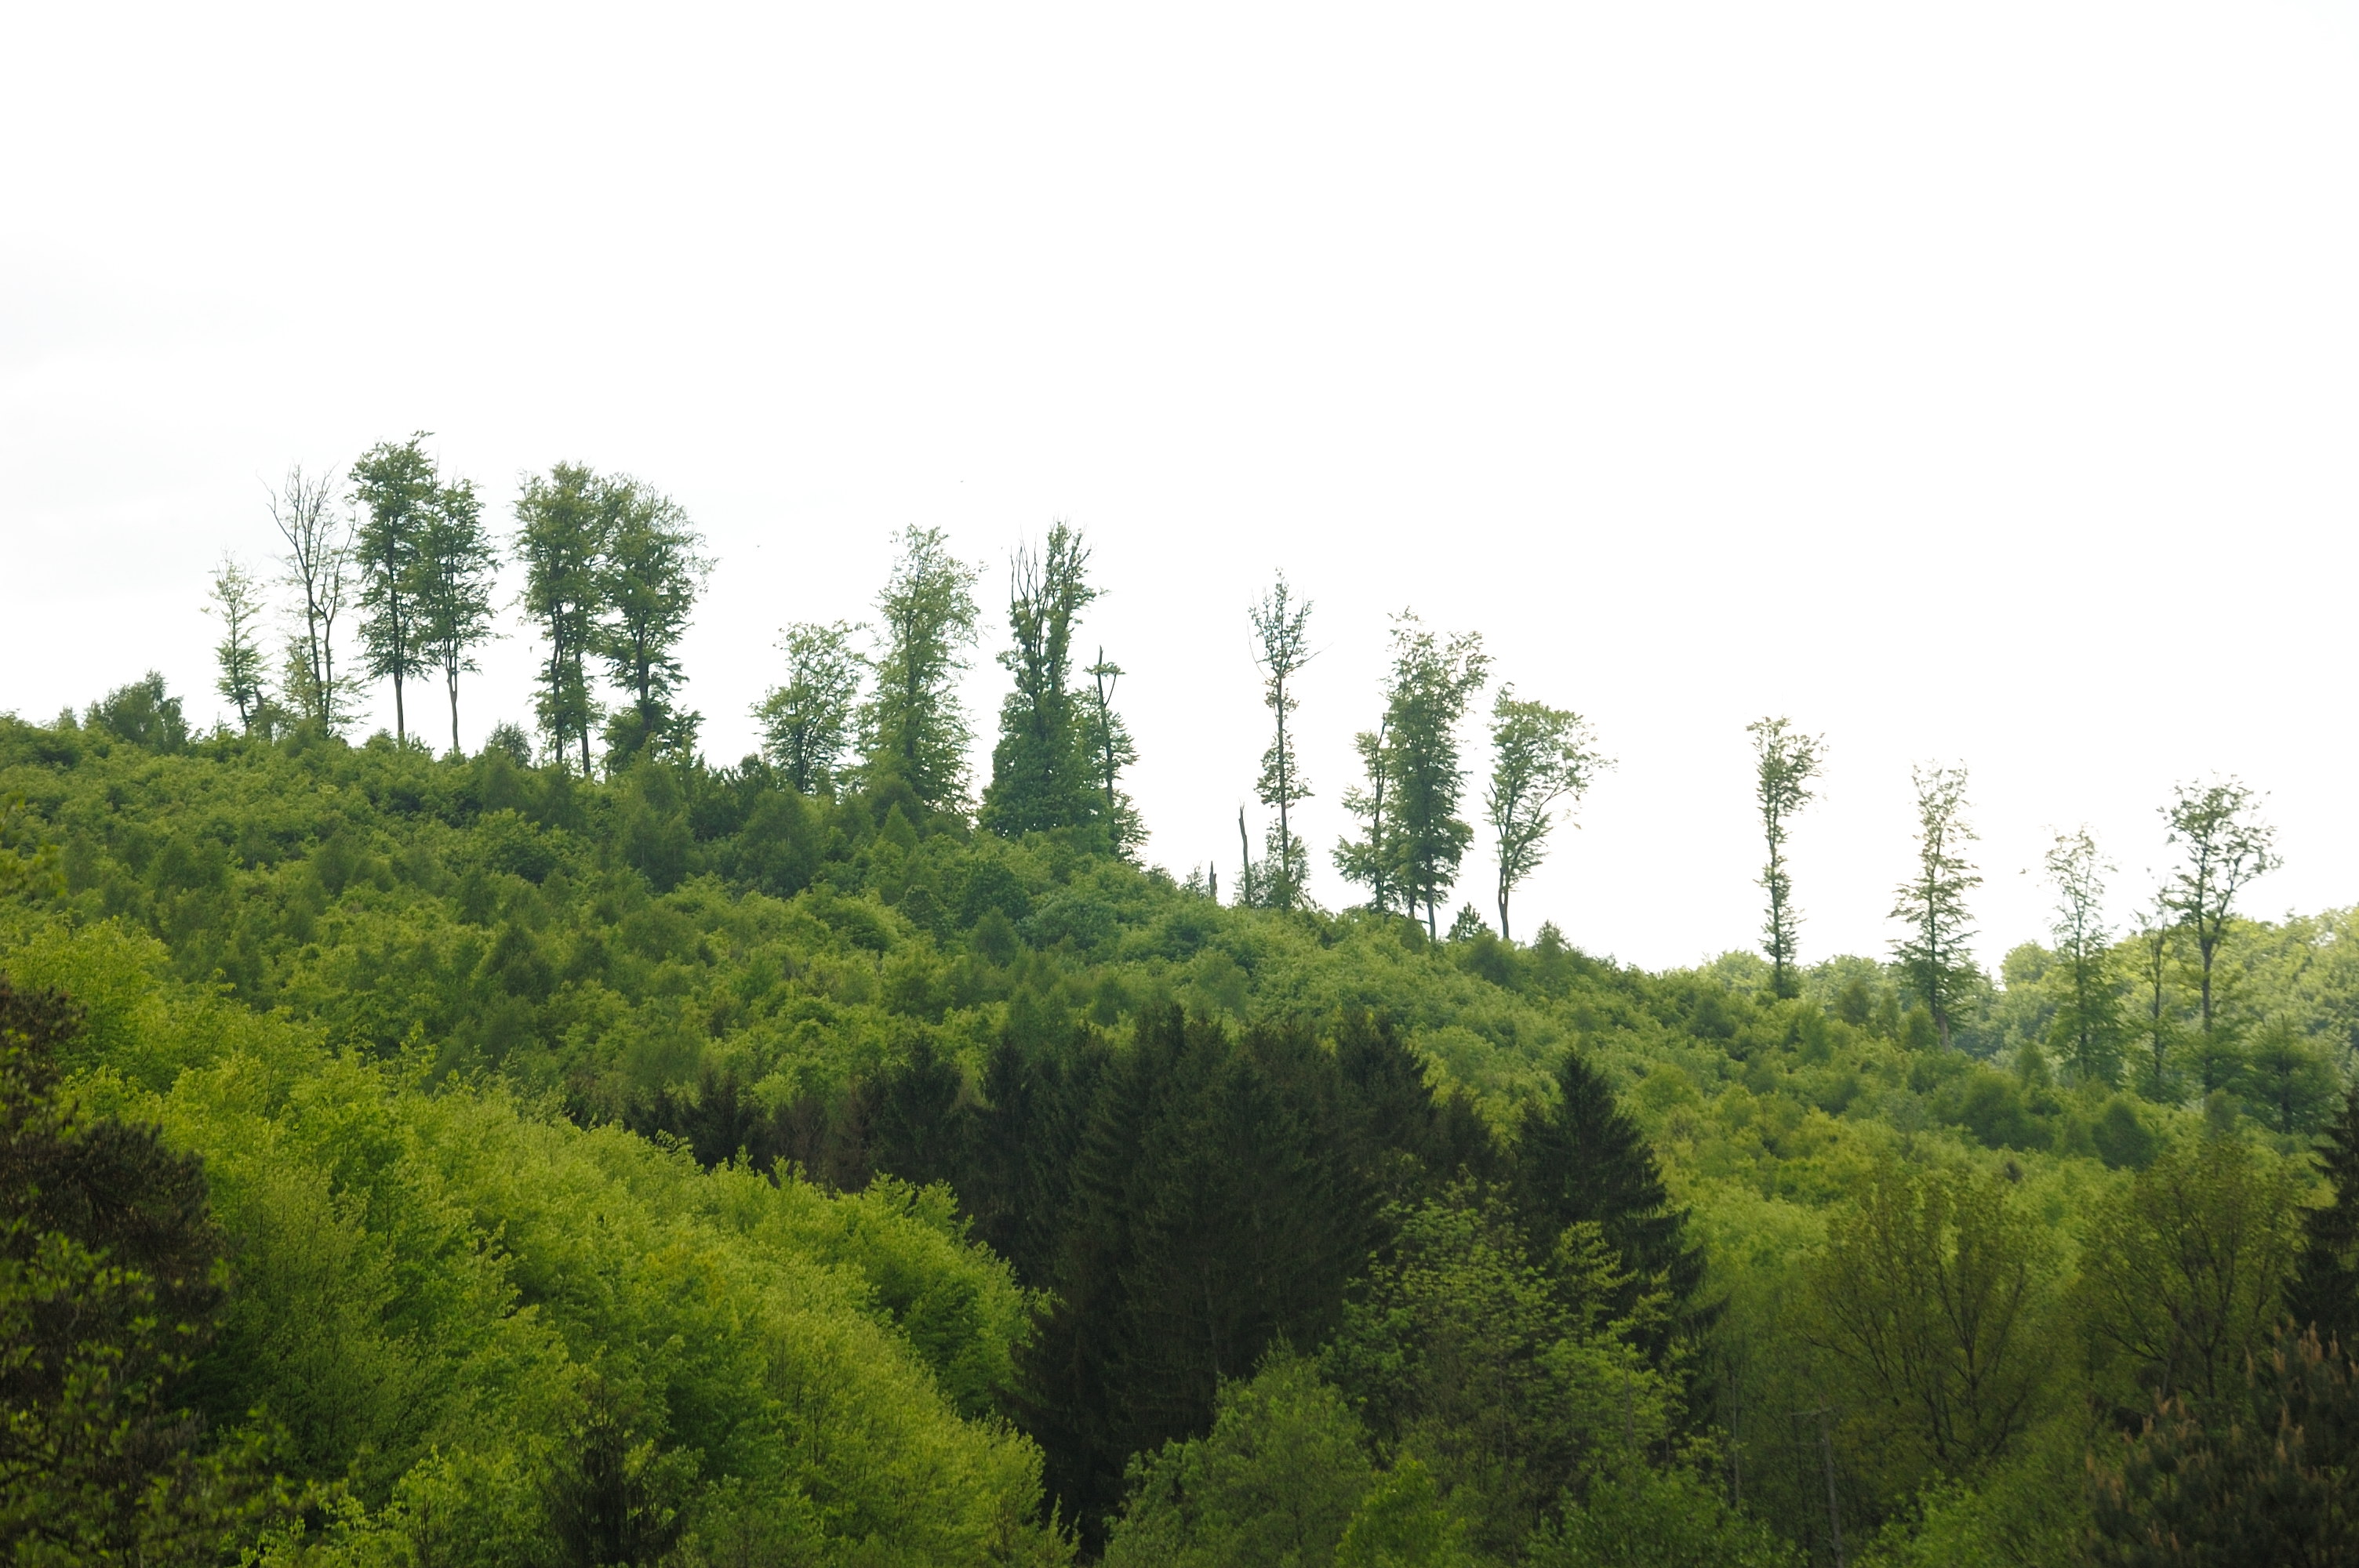 File:Tree tops in an Alsatian forest.jpg - Wikimedia Commons